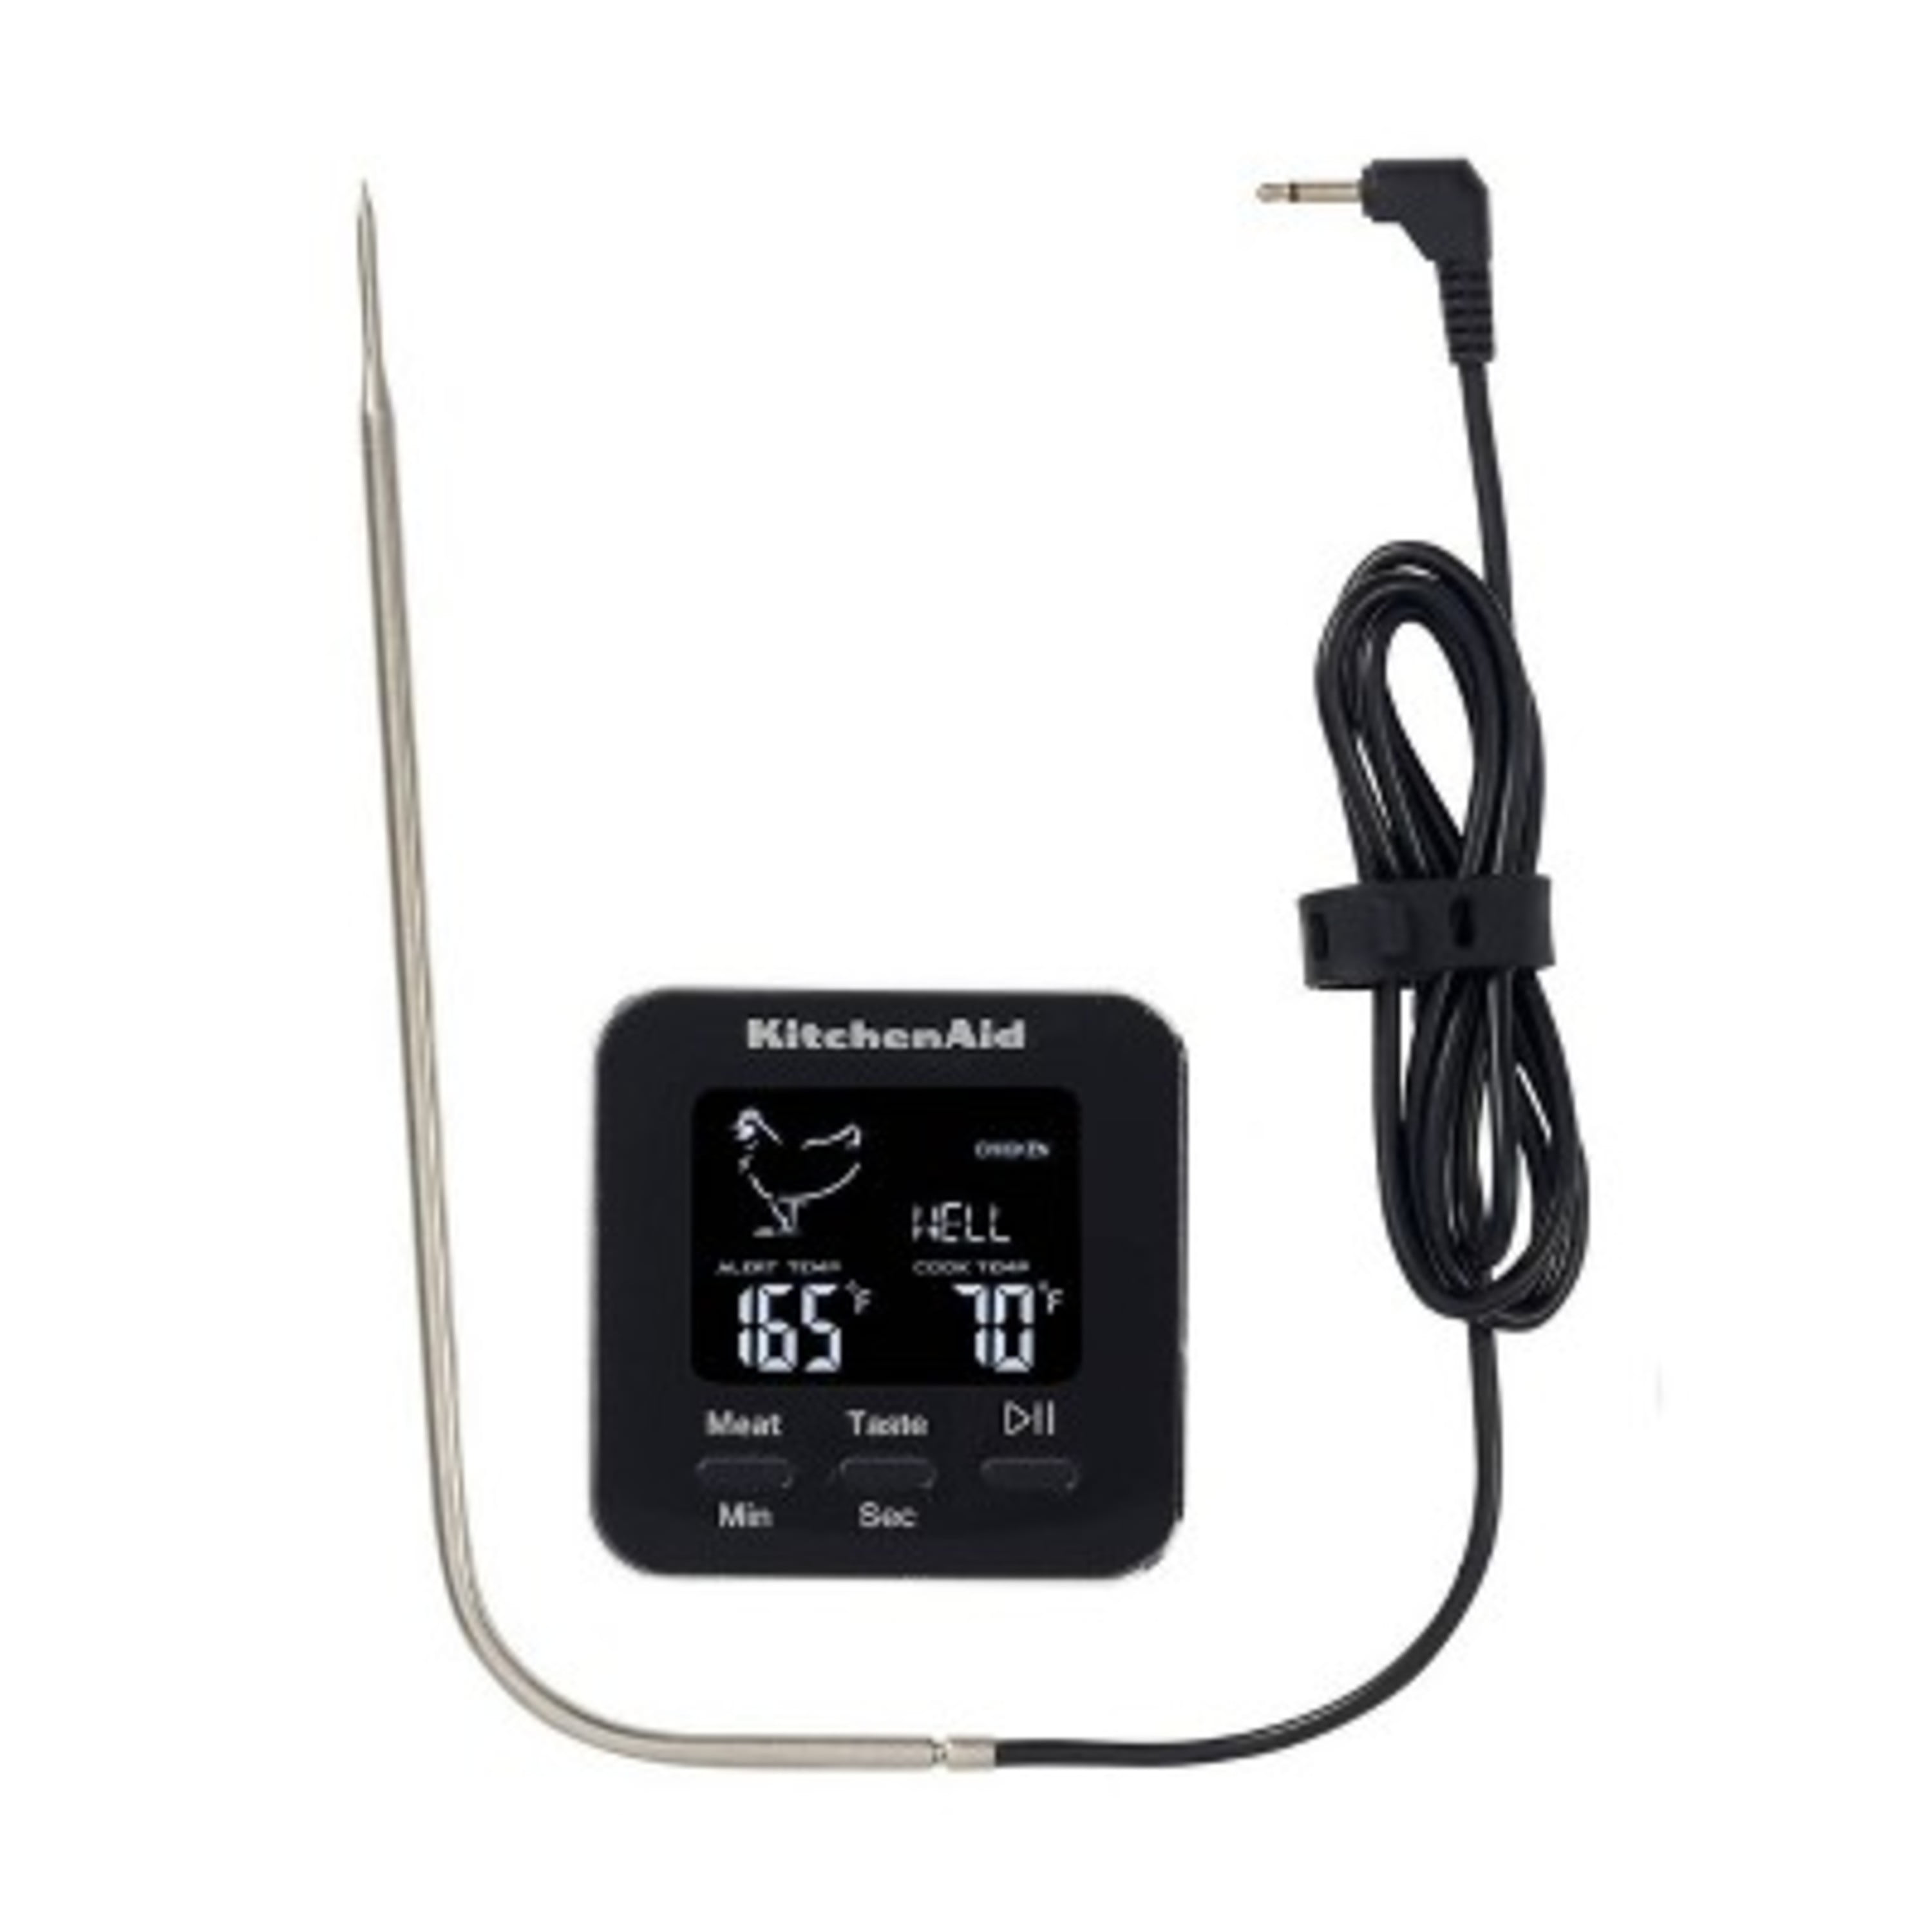 KitchenAid Digital Instant Read Thermometer Black -40F to 482F TEMPERATURE RANGE 